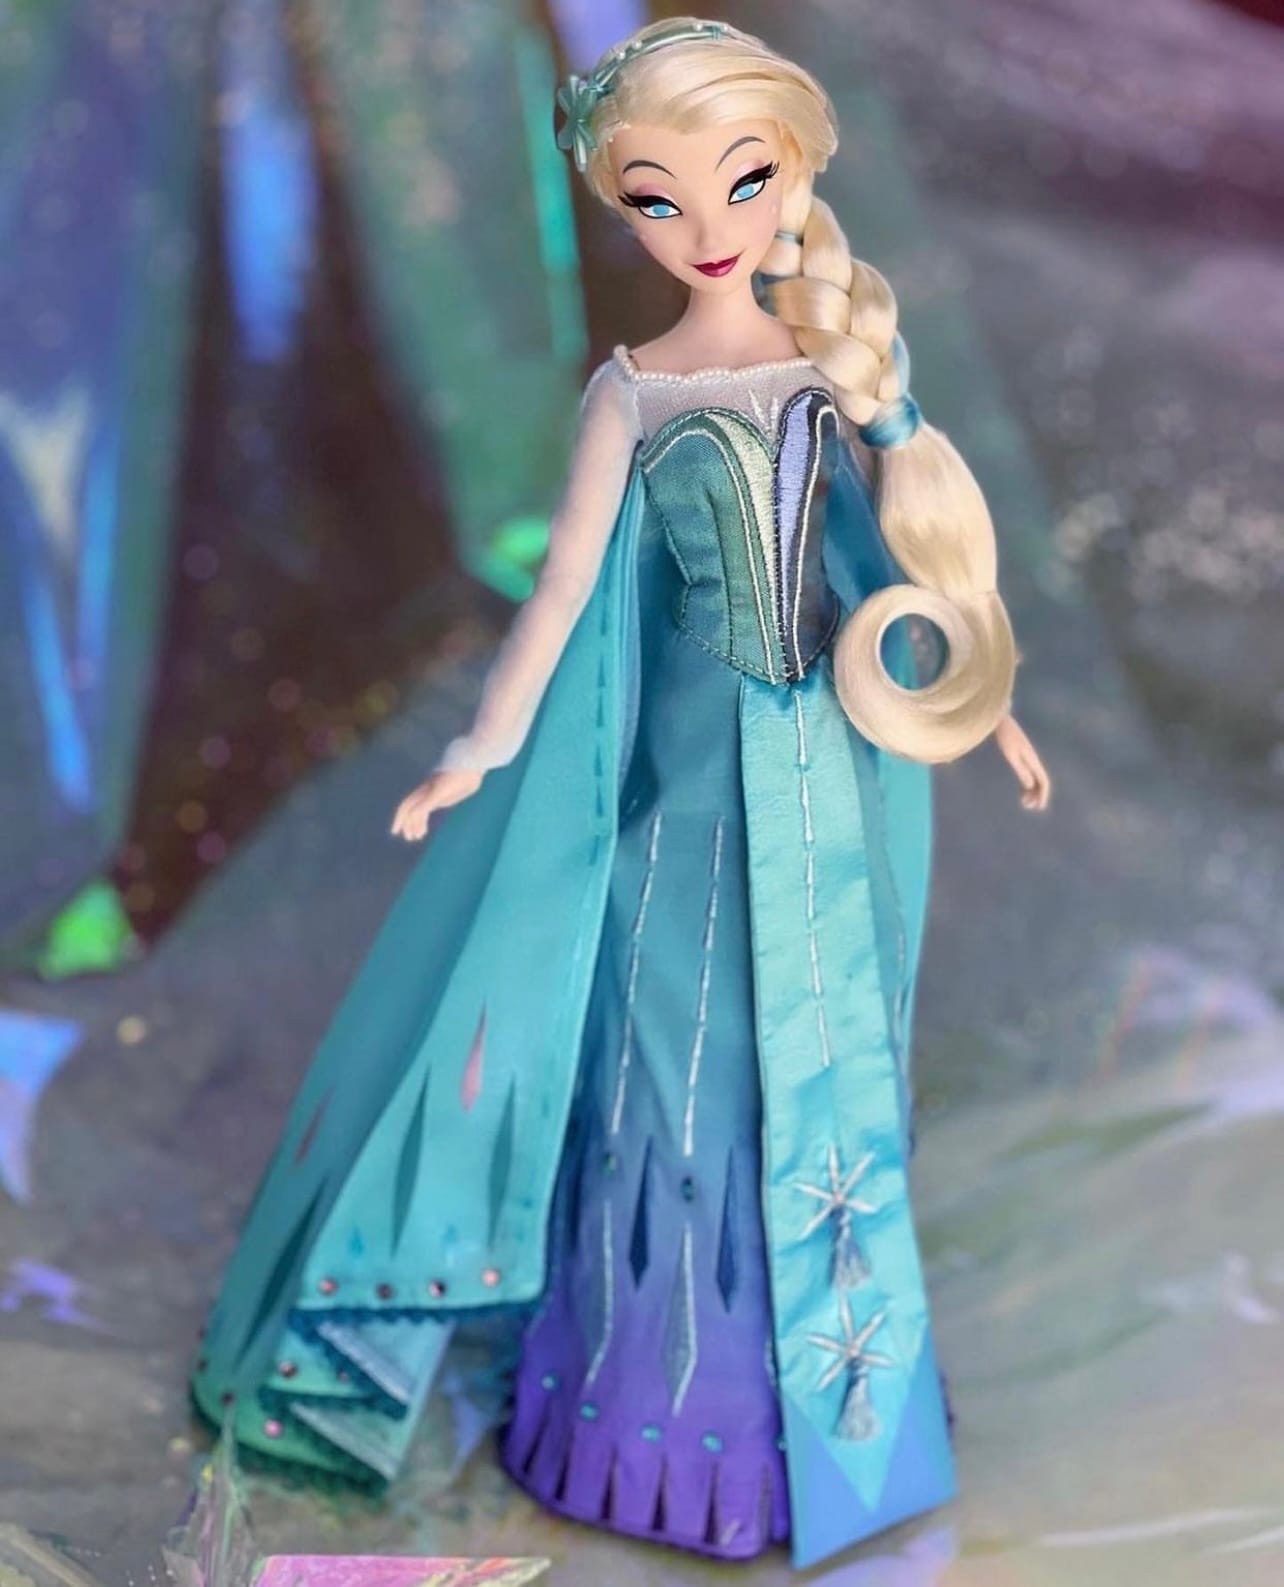 1662969770 Youloveit Com Disney Frozen Limited Edition Doll Britanee Lee01 